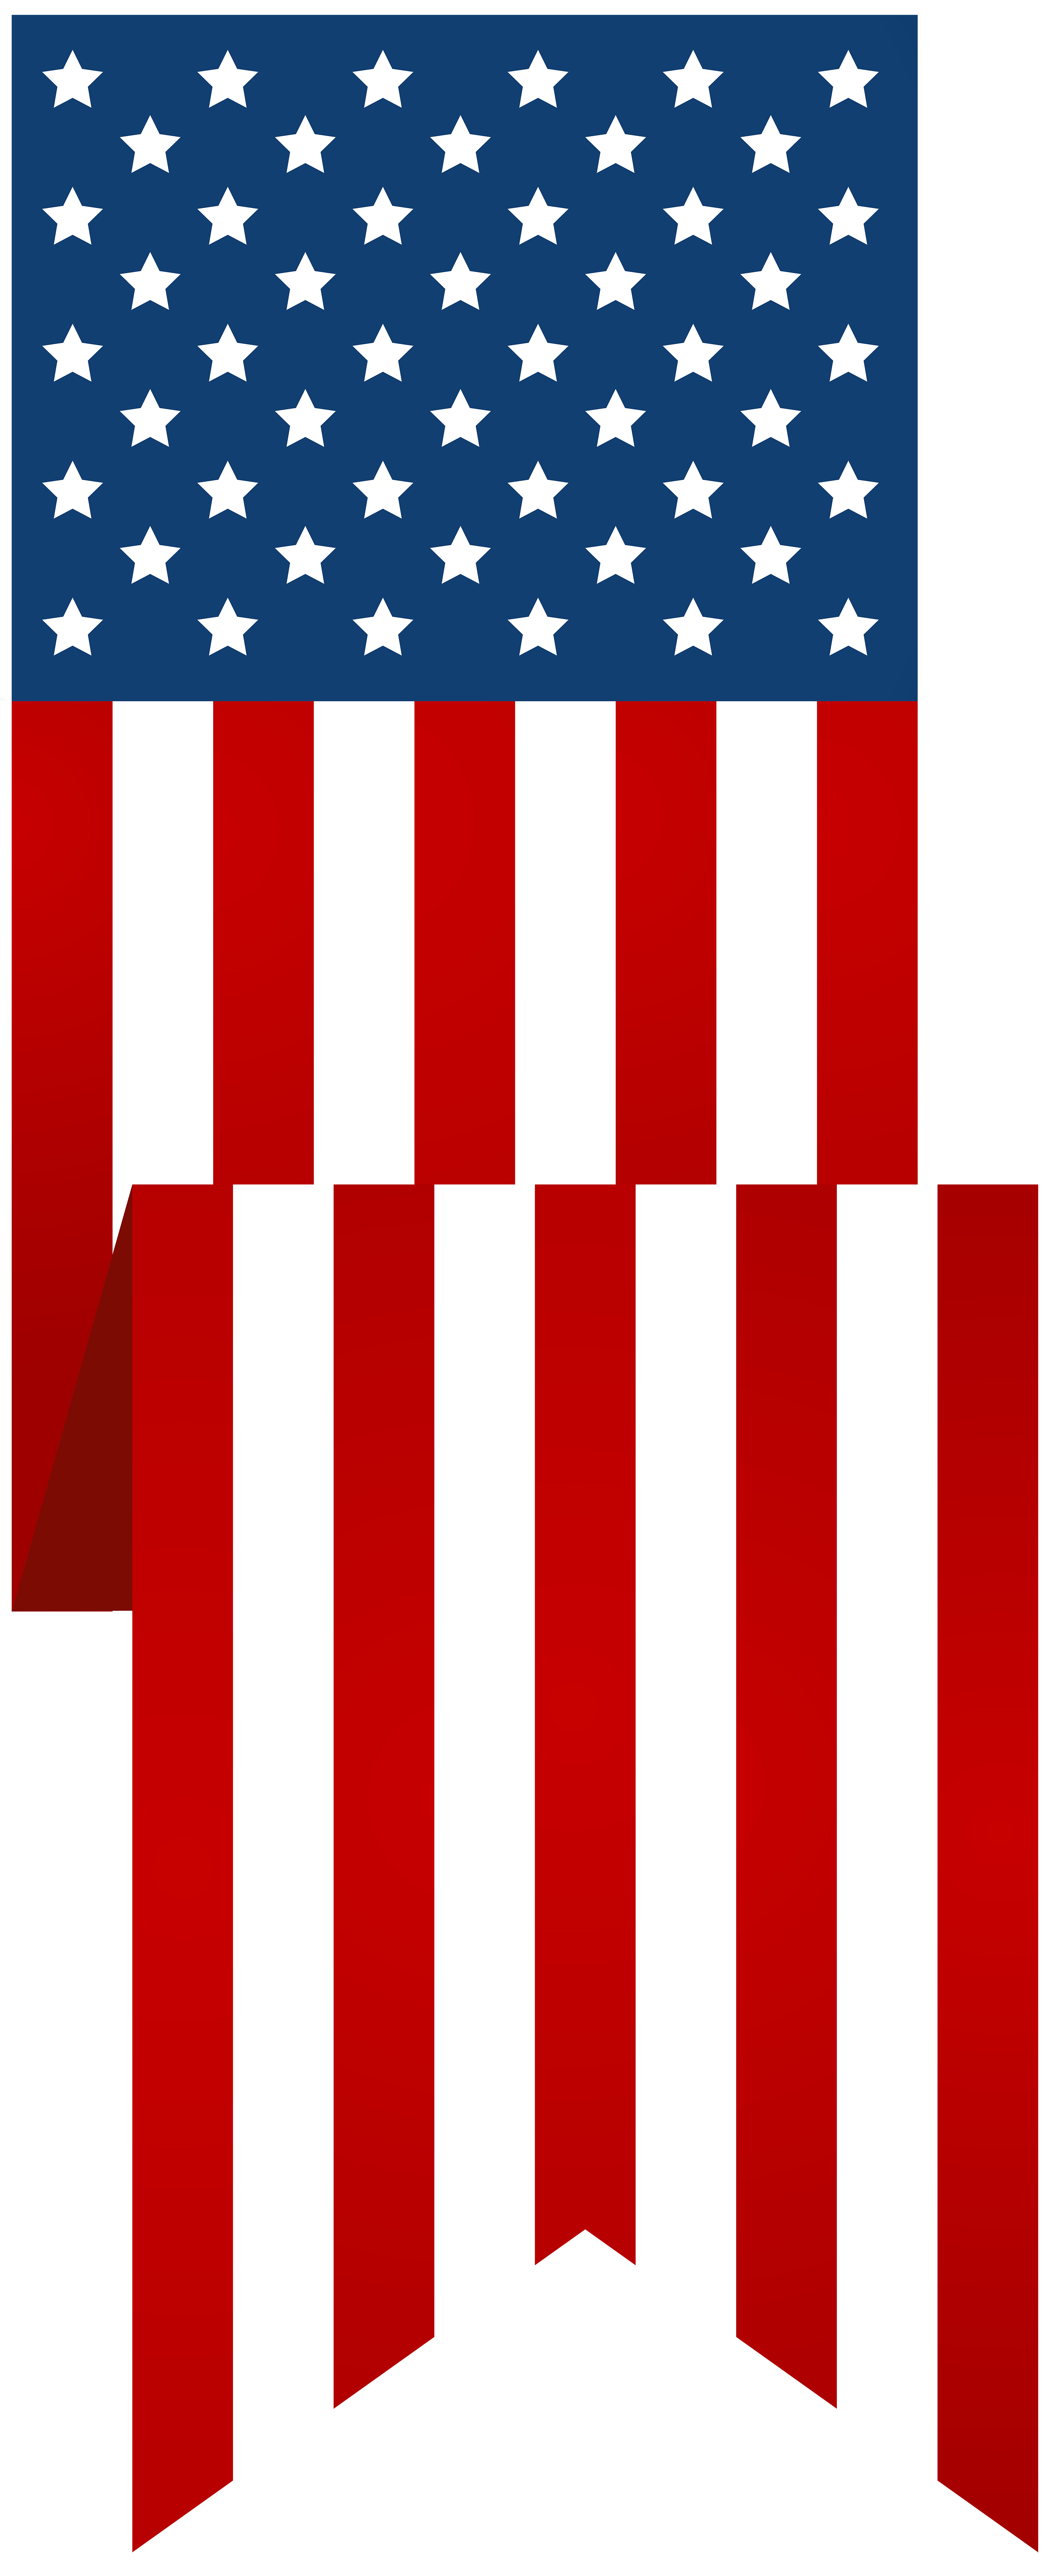 USA Vertical Banner PNG Clip Art Image.